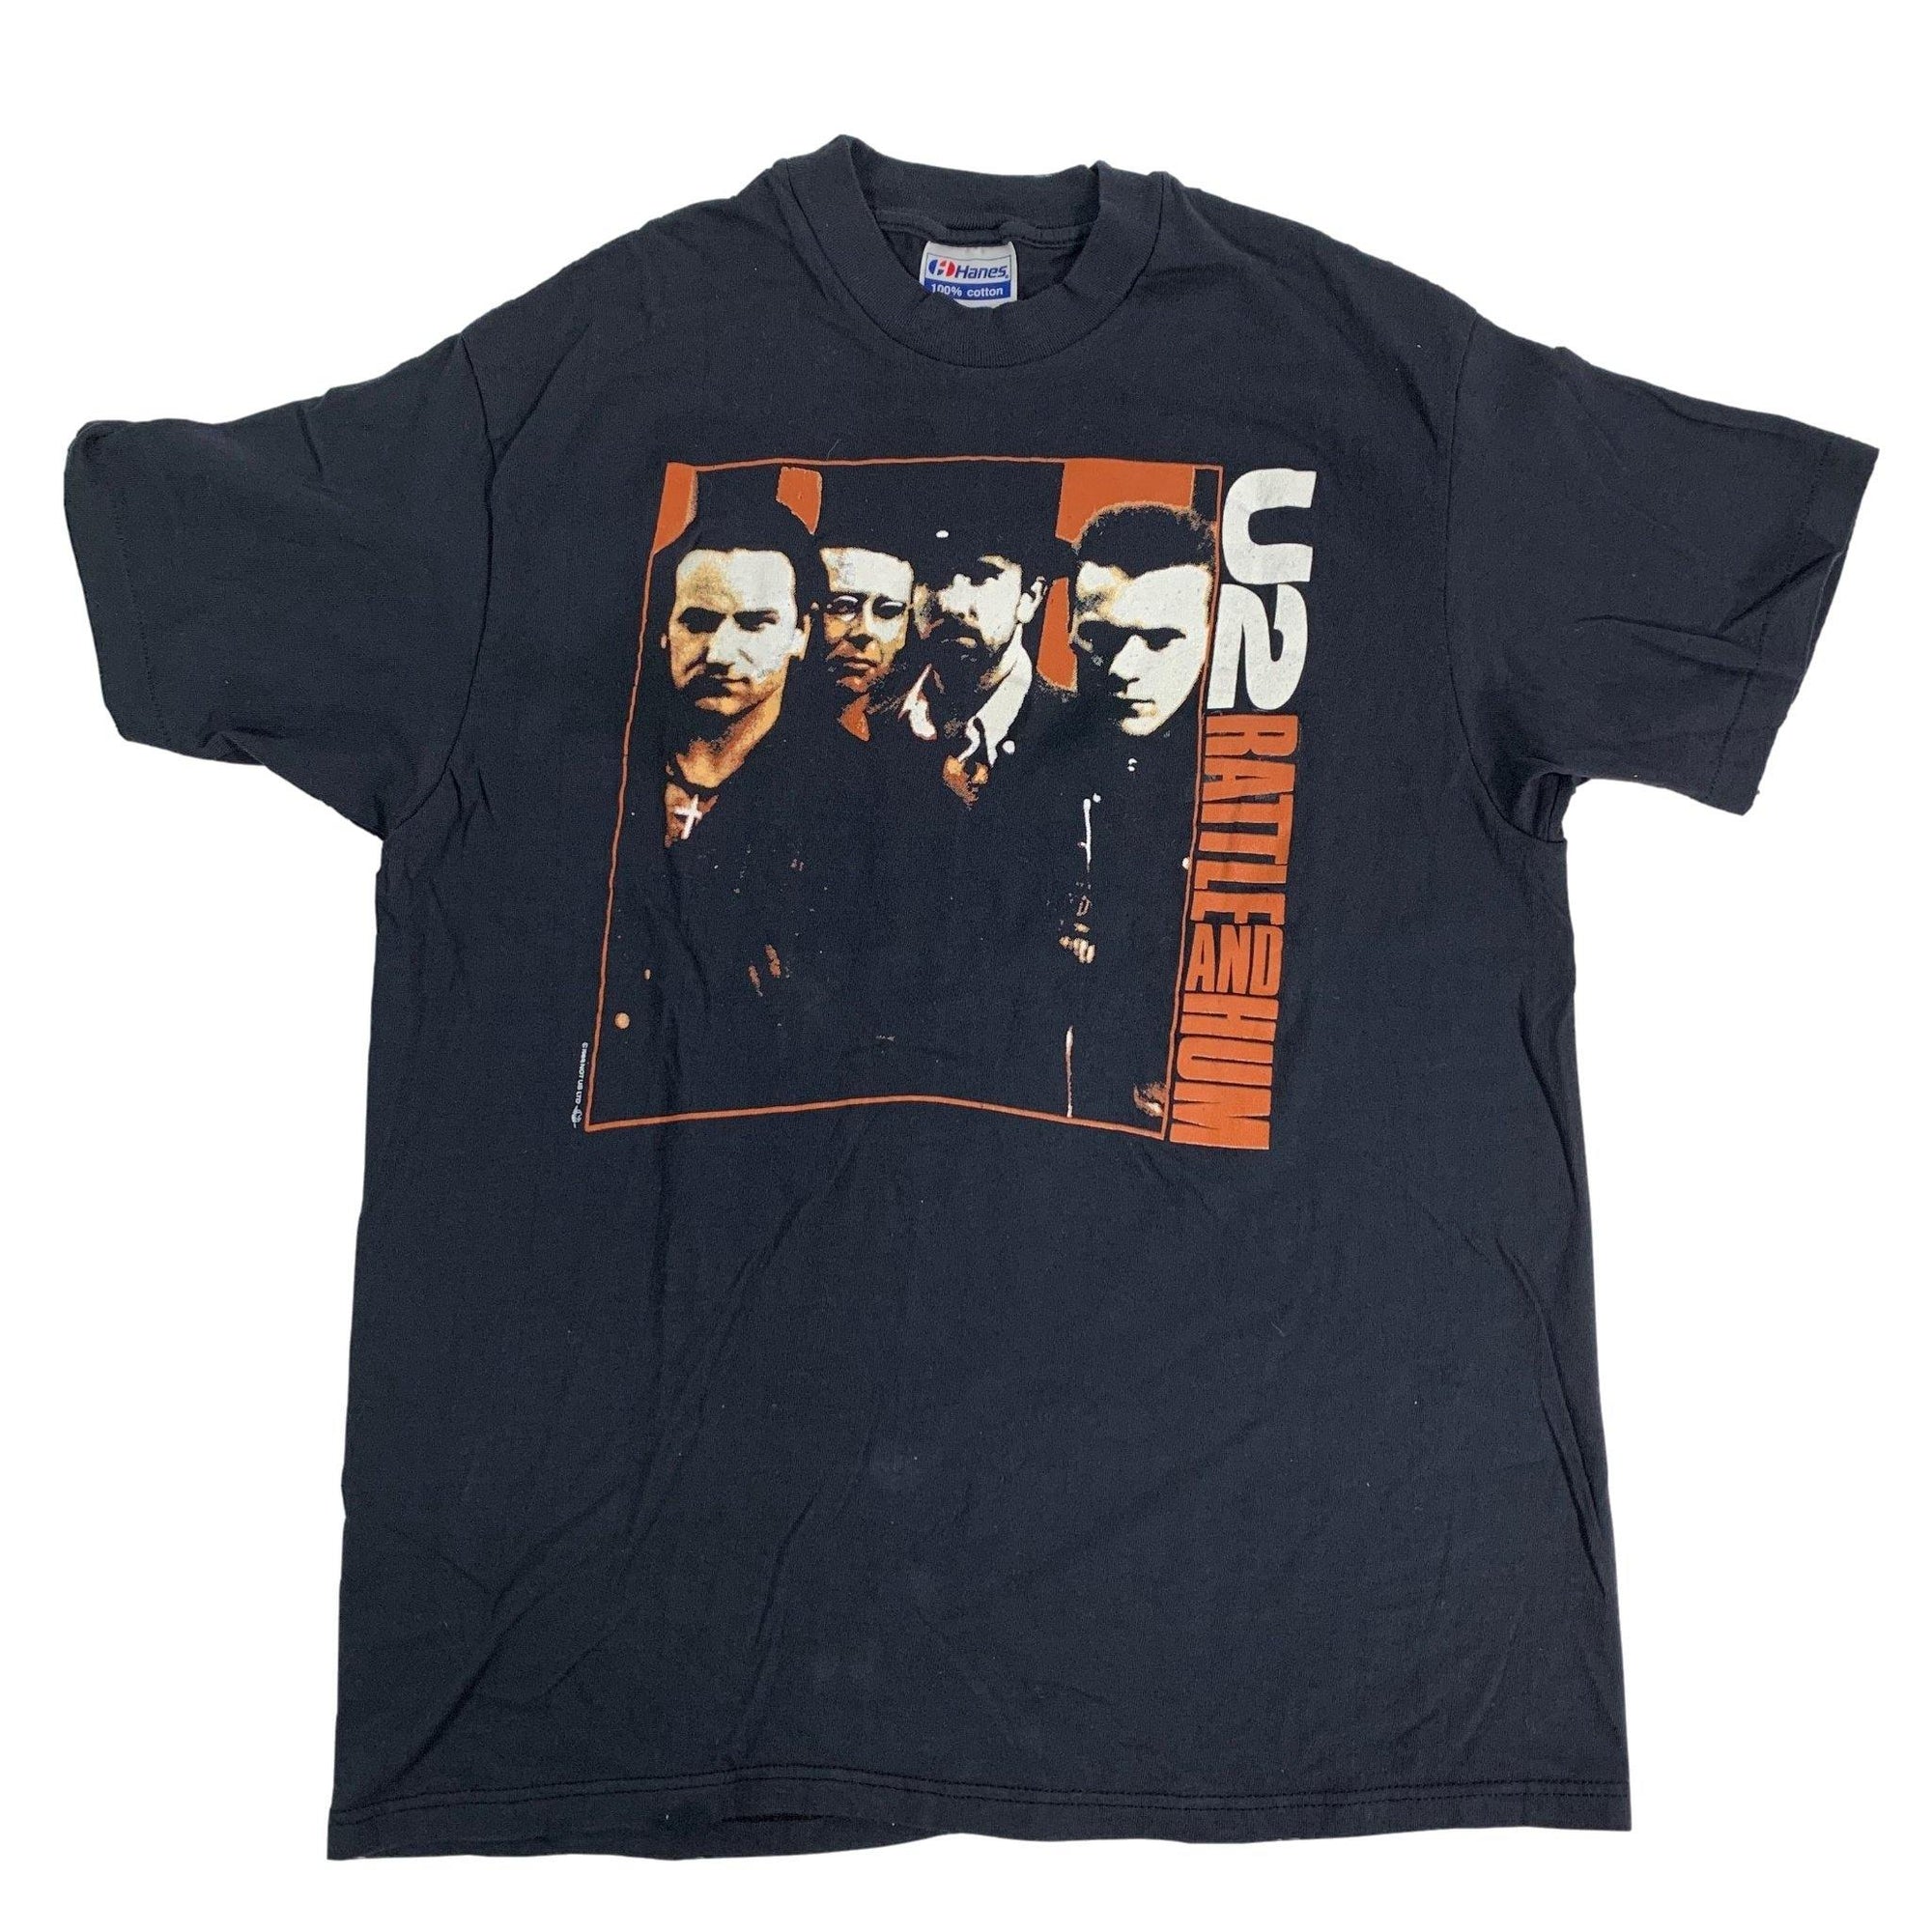 Vintage U2 "Rattle And Hum" T-Shirt - jointcustodydc